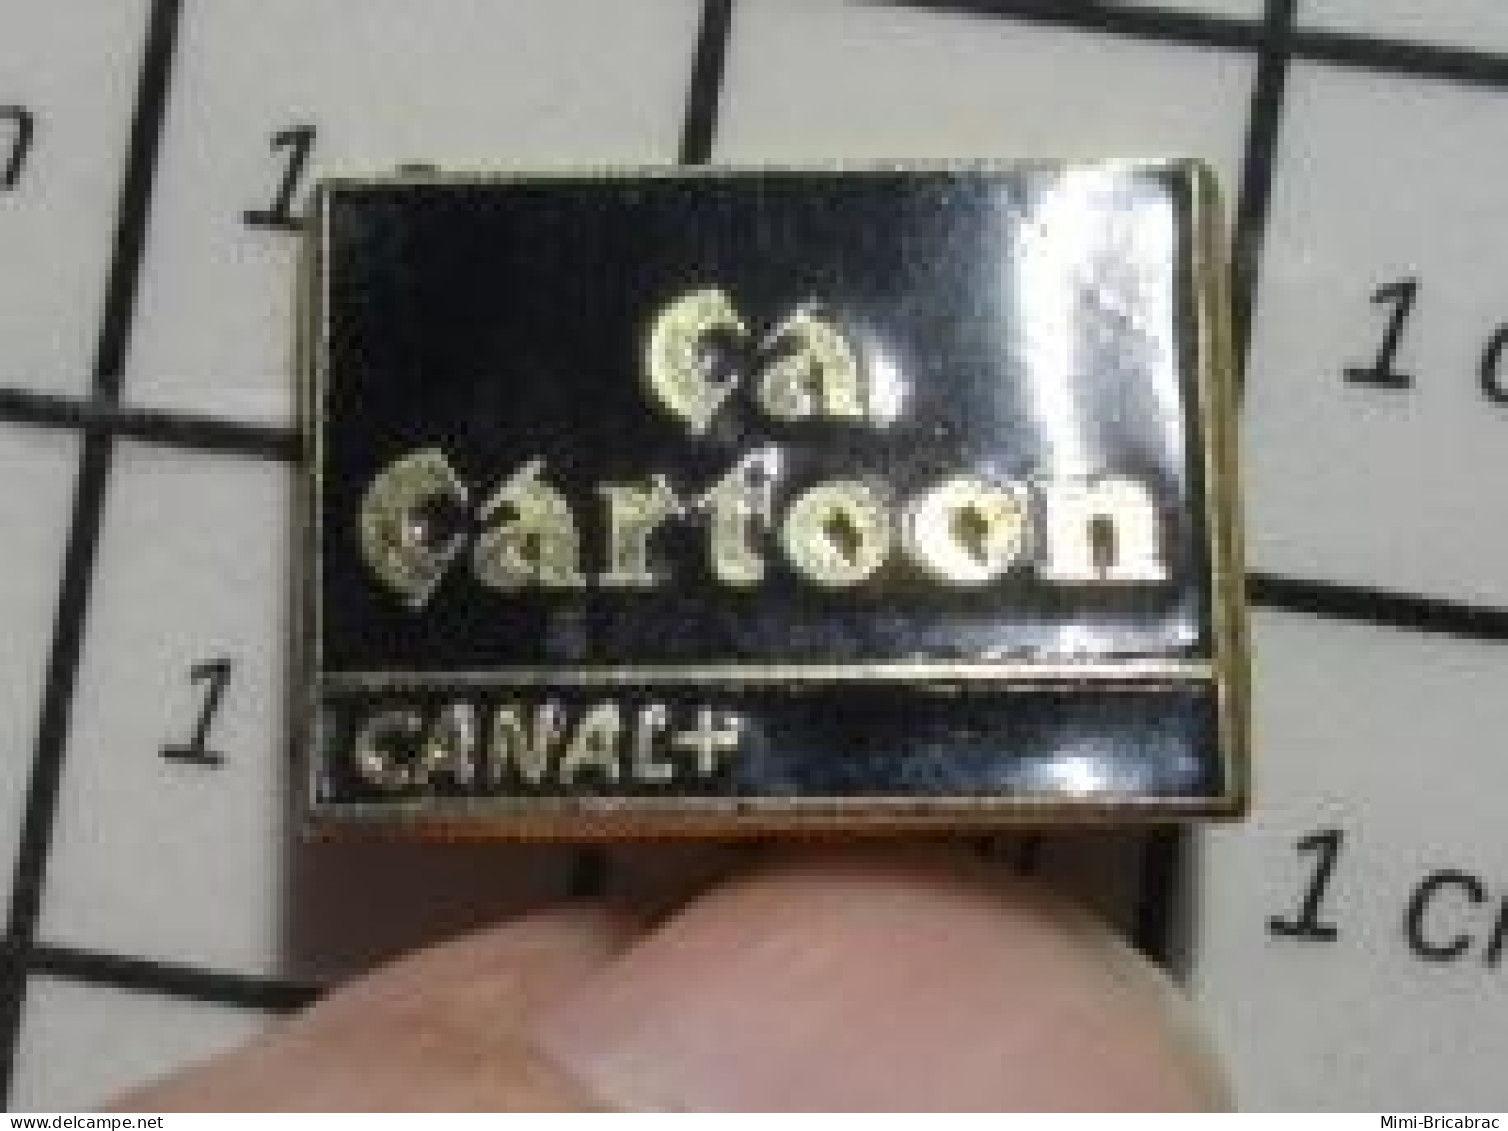 3517 Pin's Pins / Beau Et Rare / MEDIAS / EMISSION DE TELE CANAL + CA CARTOON - Mass Media